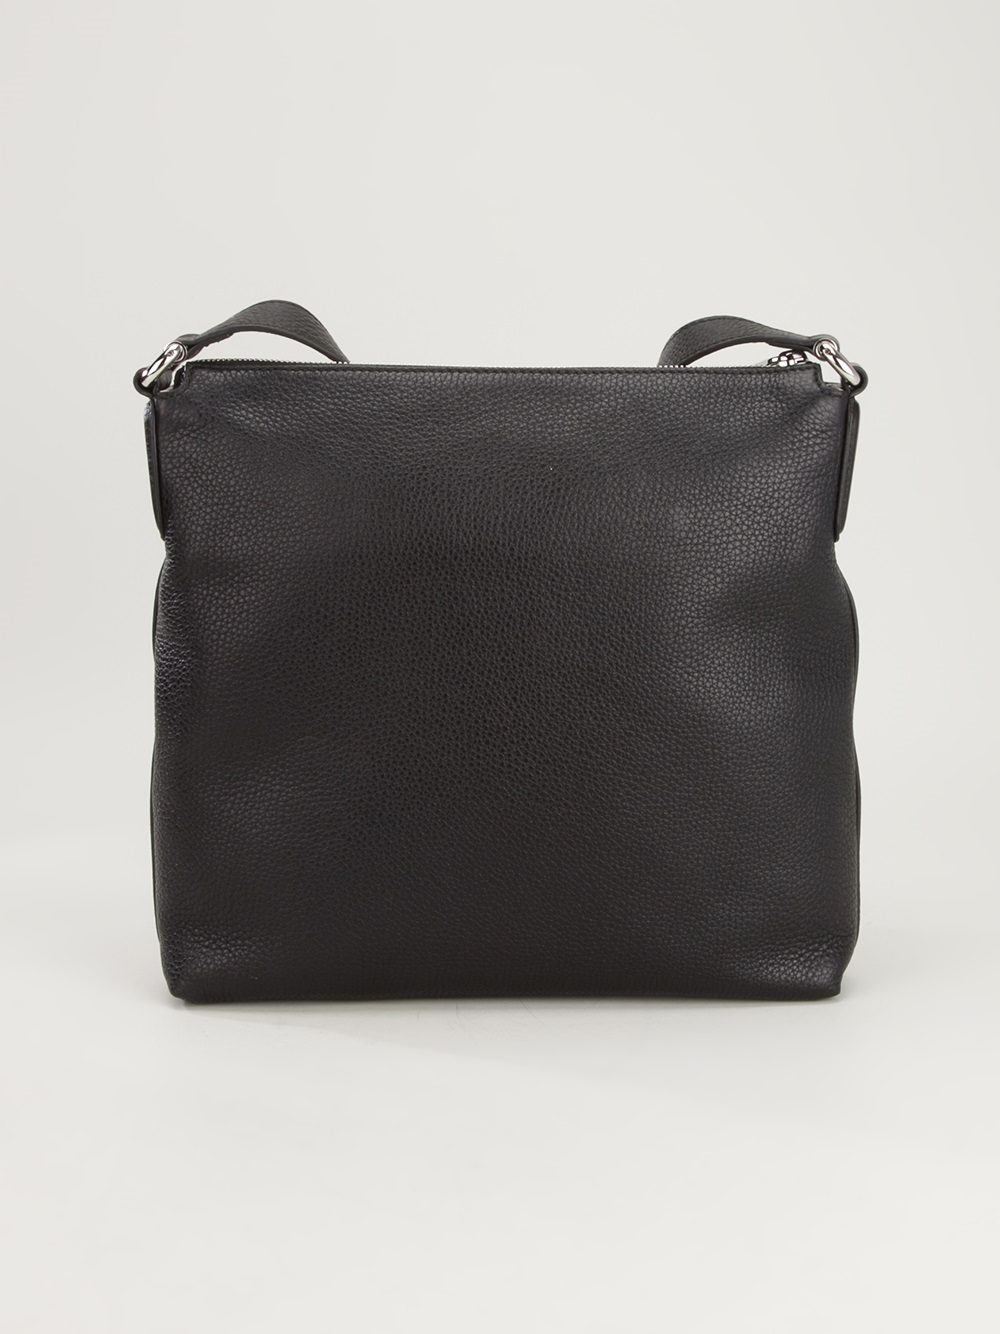 Gucci Small Square Shoulder Bag in Black for Men - Lyst